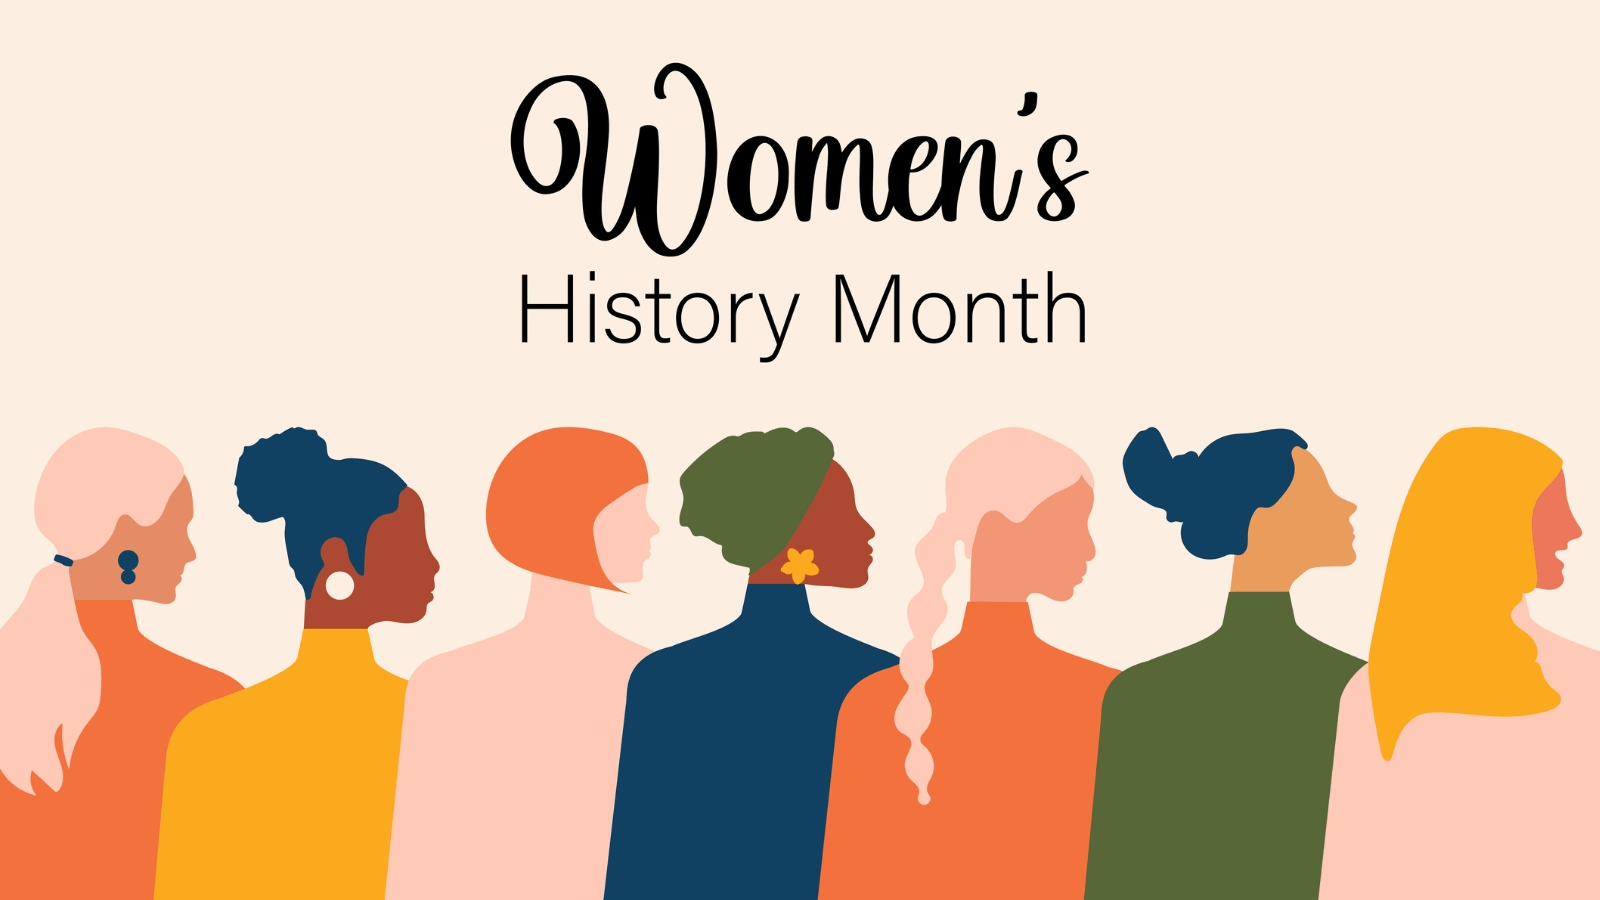 women's history month illustration